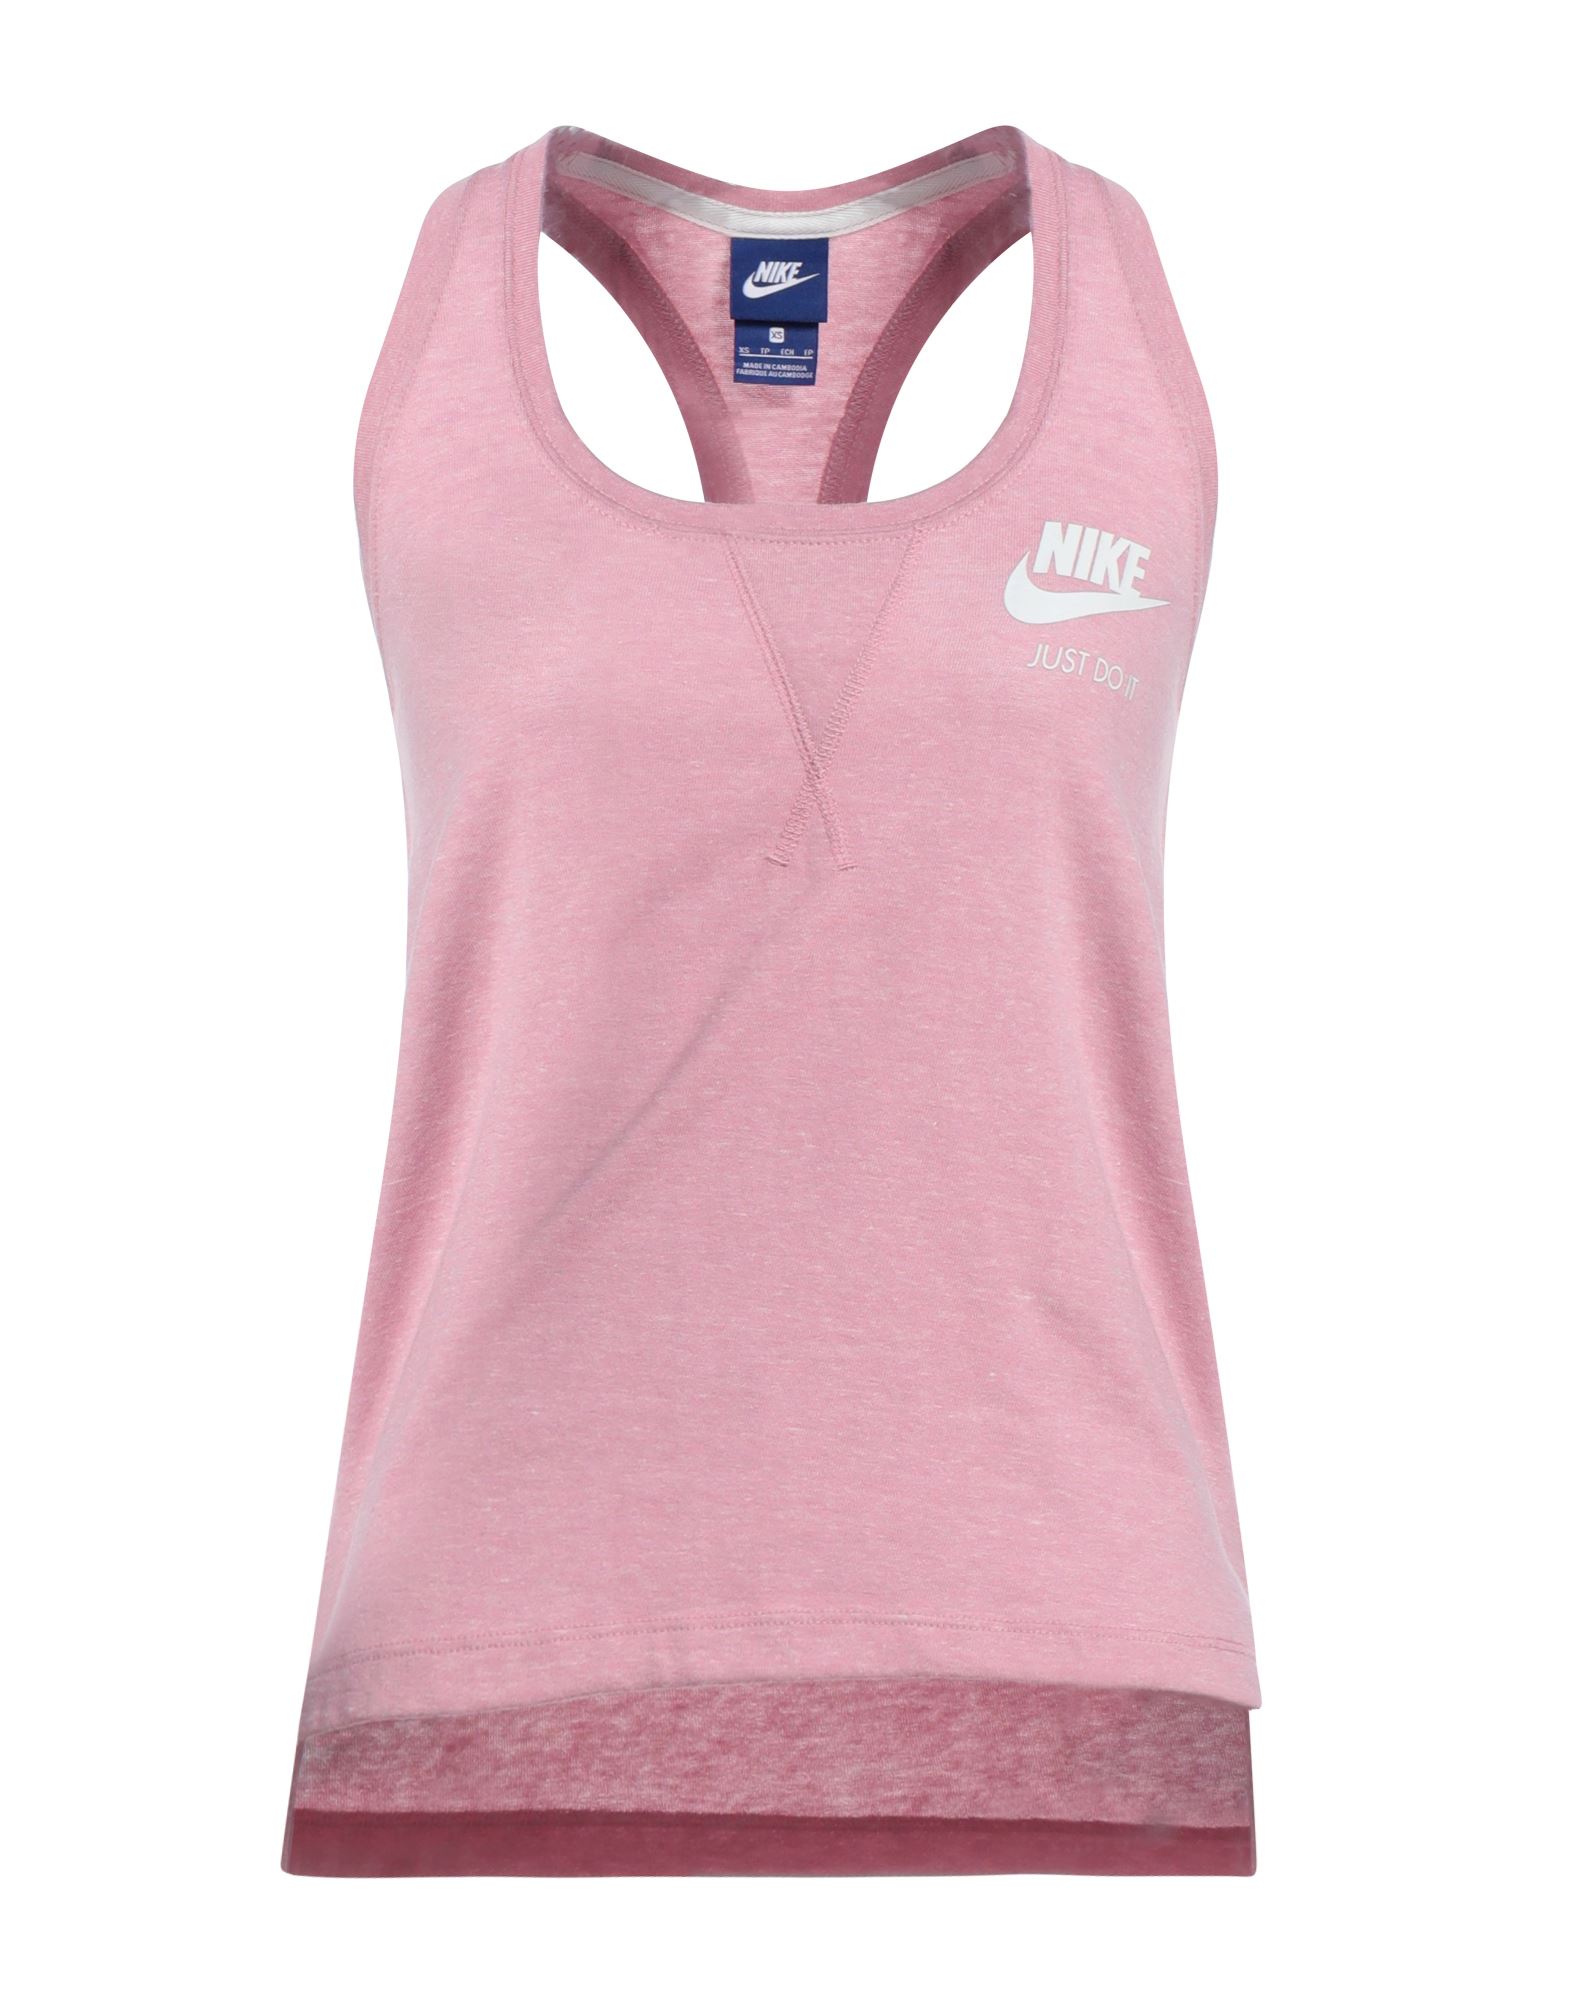 Nike Tank Tops In Pastel Pink